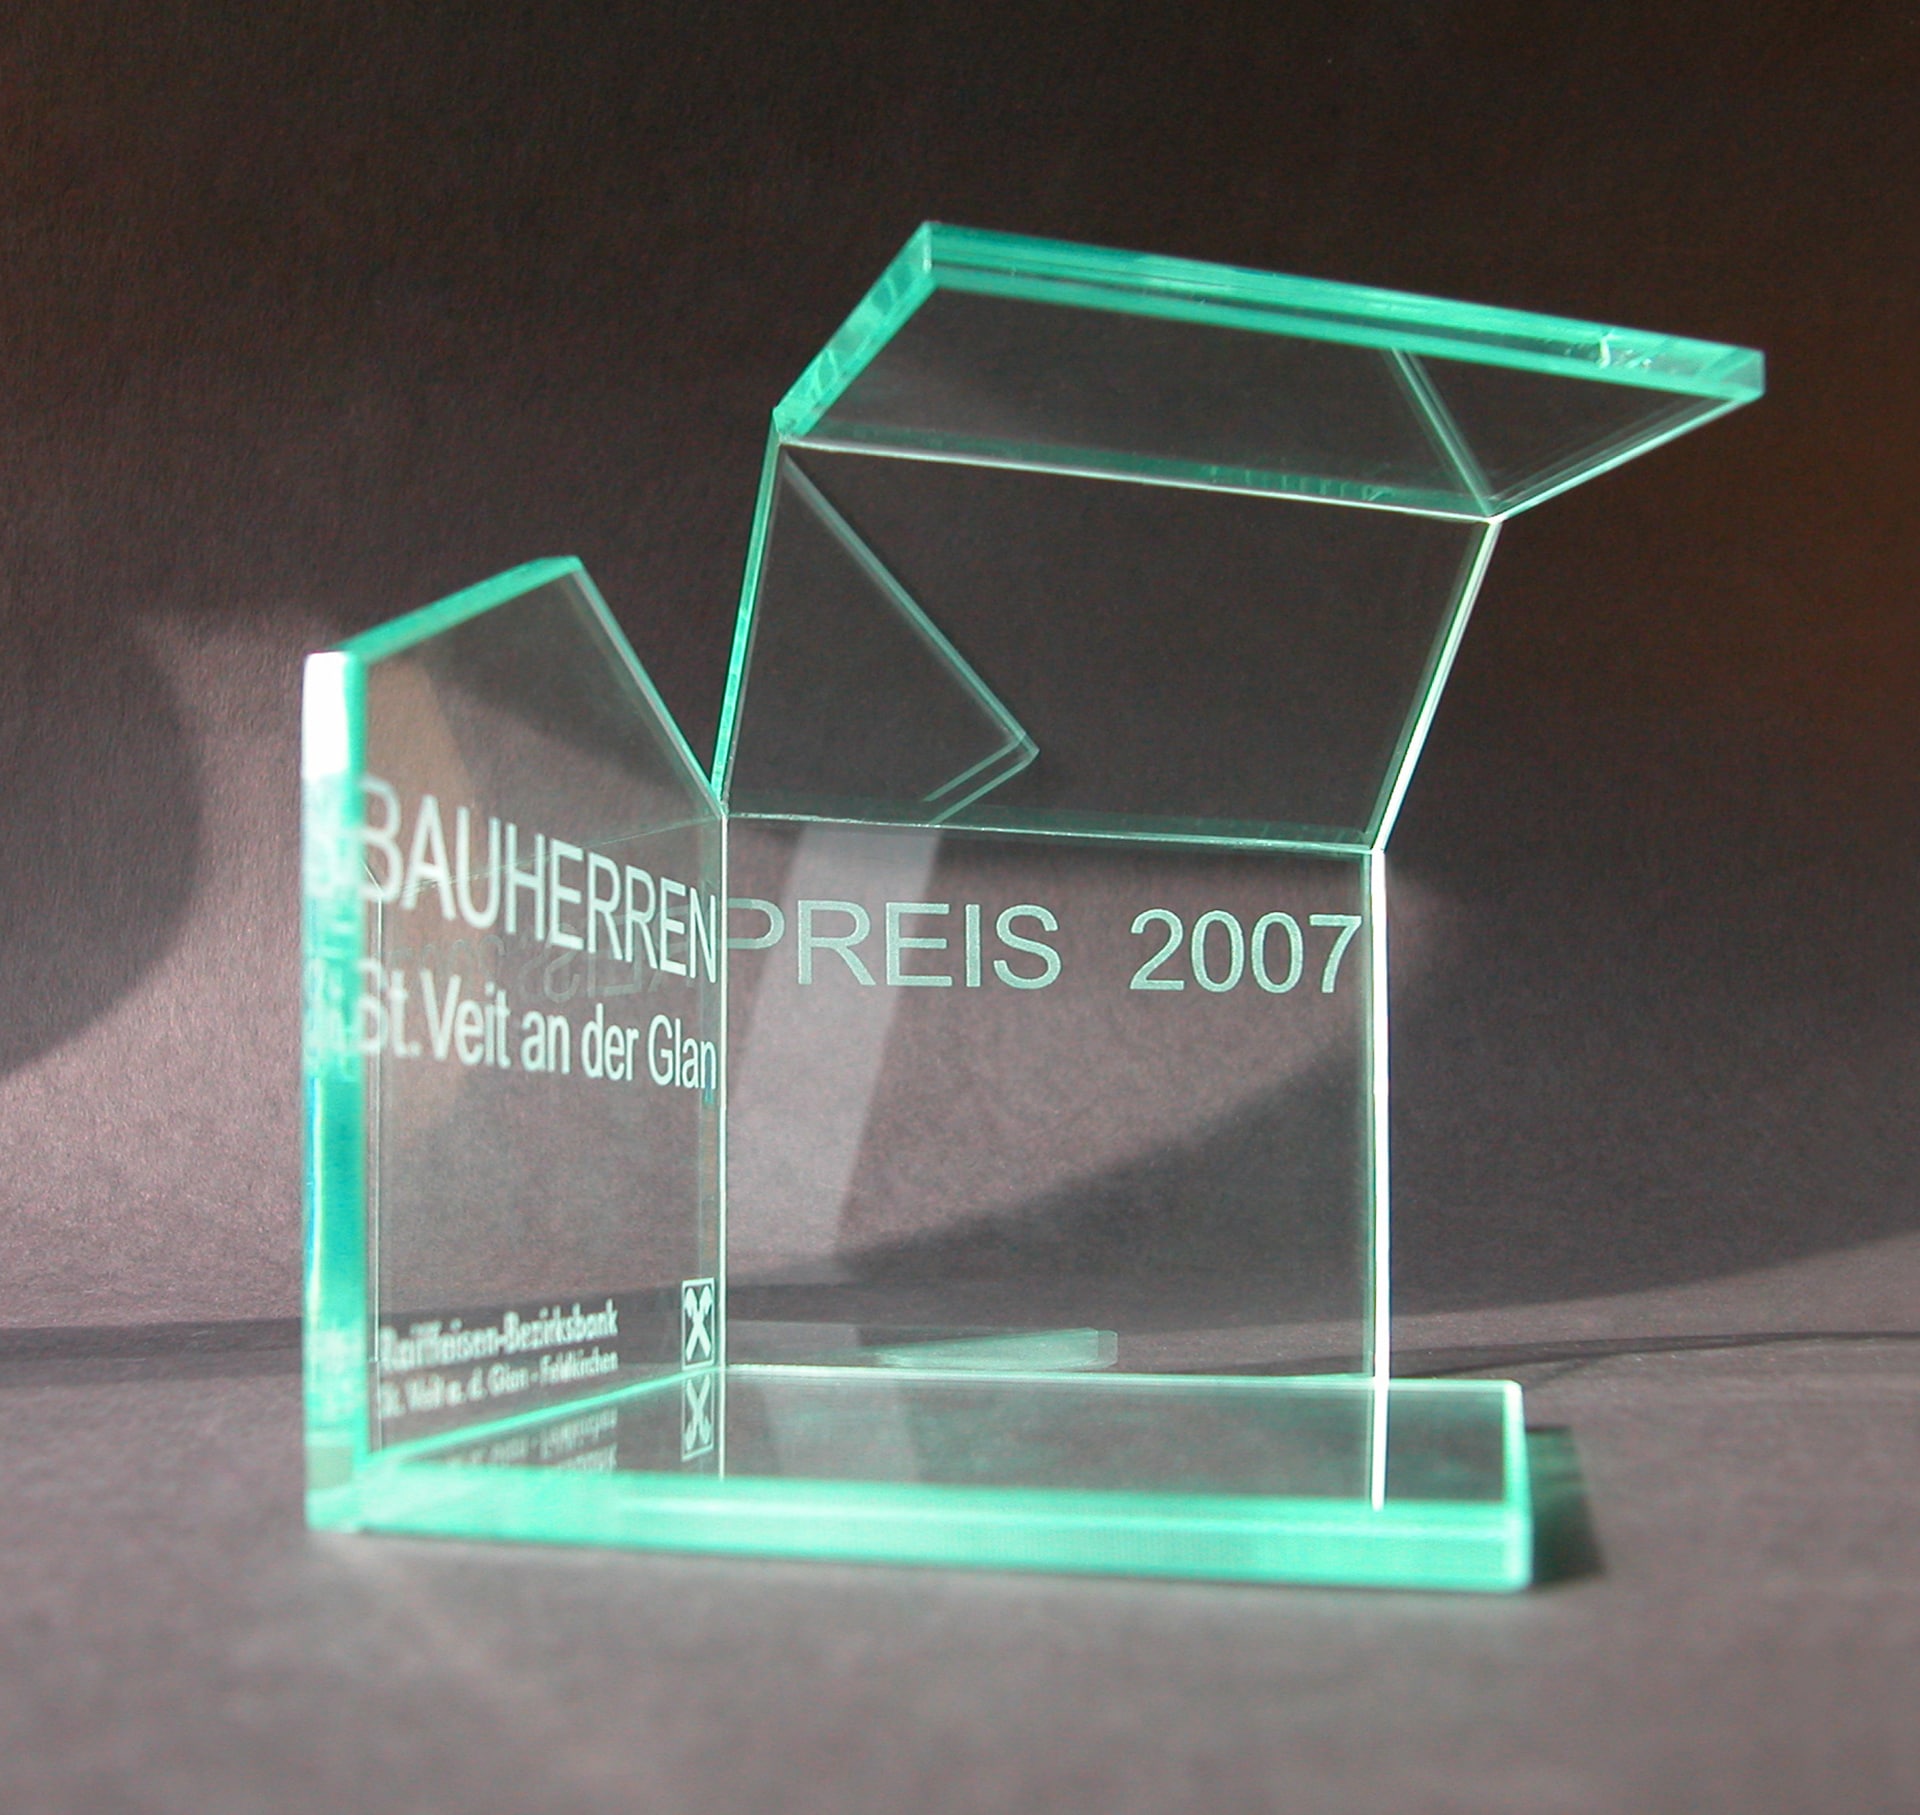 Bauherrenpreis St. Veit an der Glan 2007